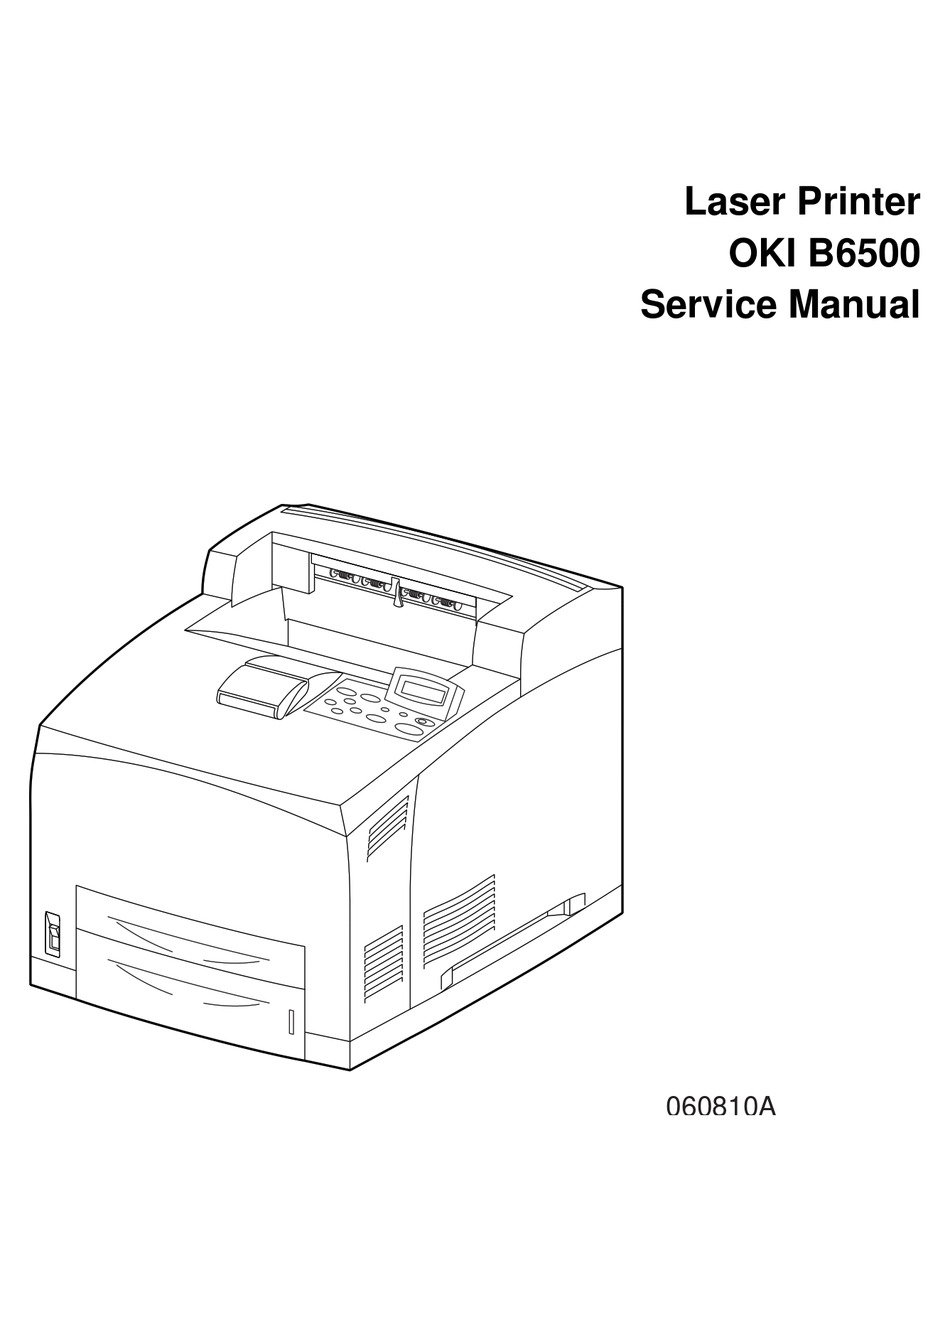 OKI B6500 SERVICE MANUAL Pdf | ManualsLib